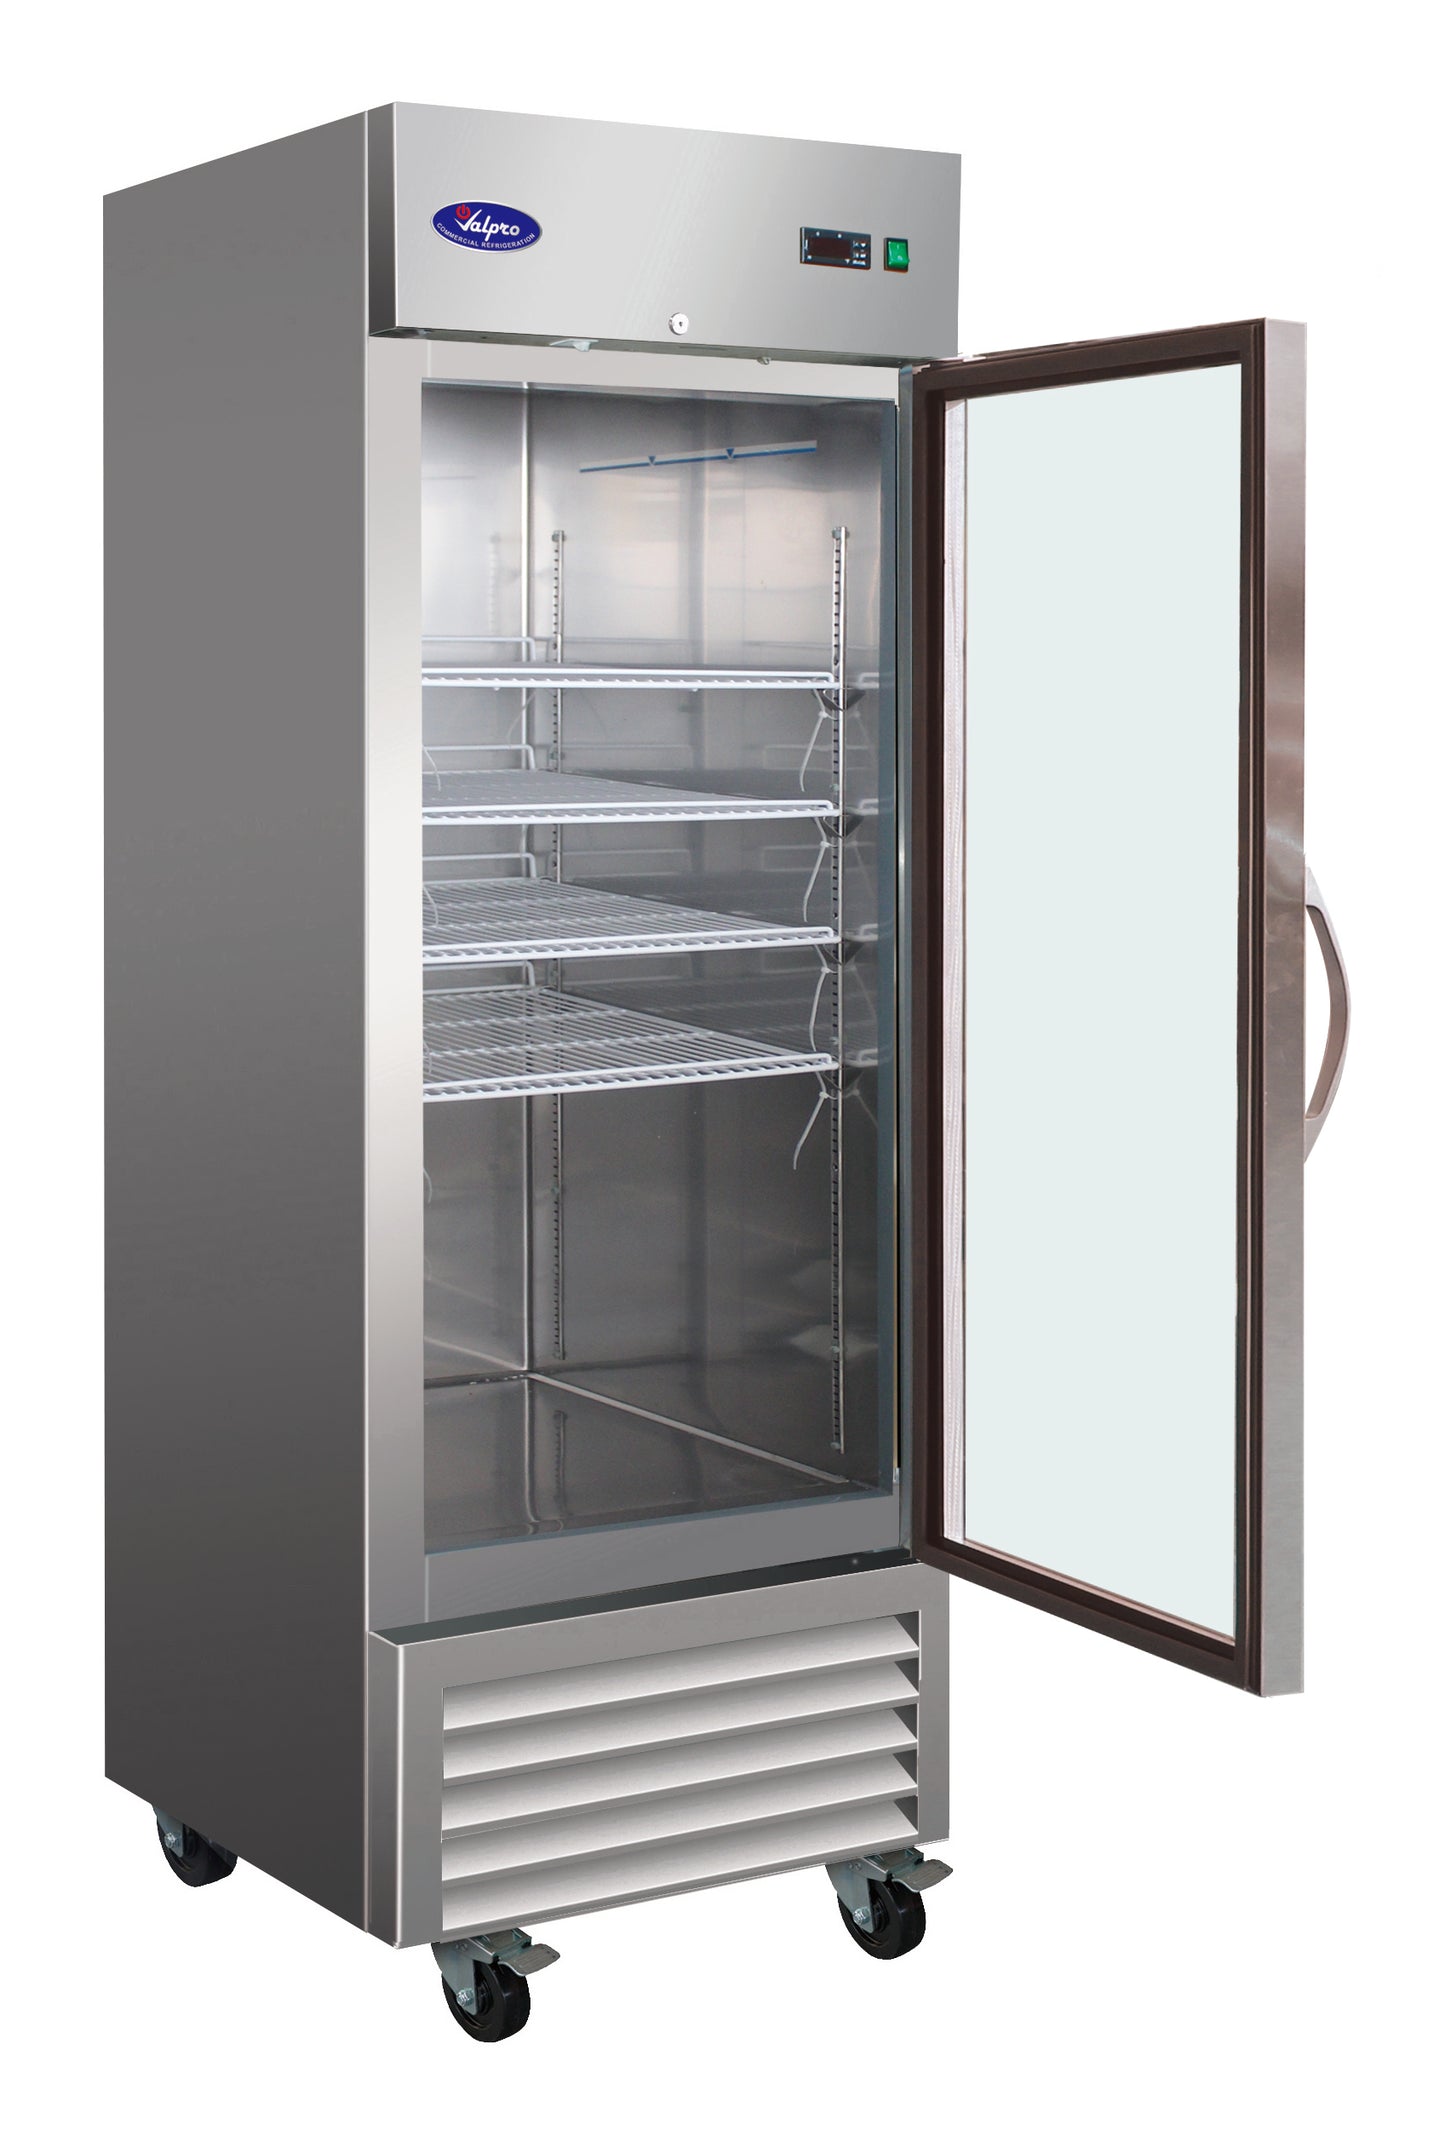 Valpro VP1FG-HC 27" One Section Glass Door Reach-In Freezer